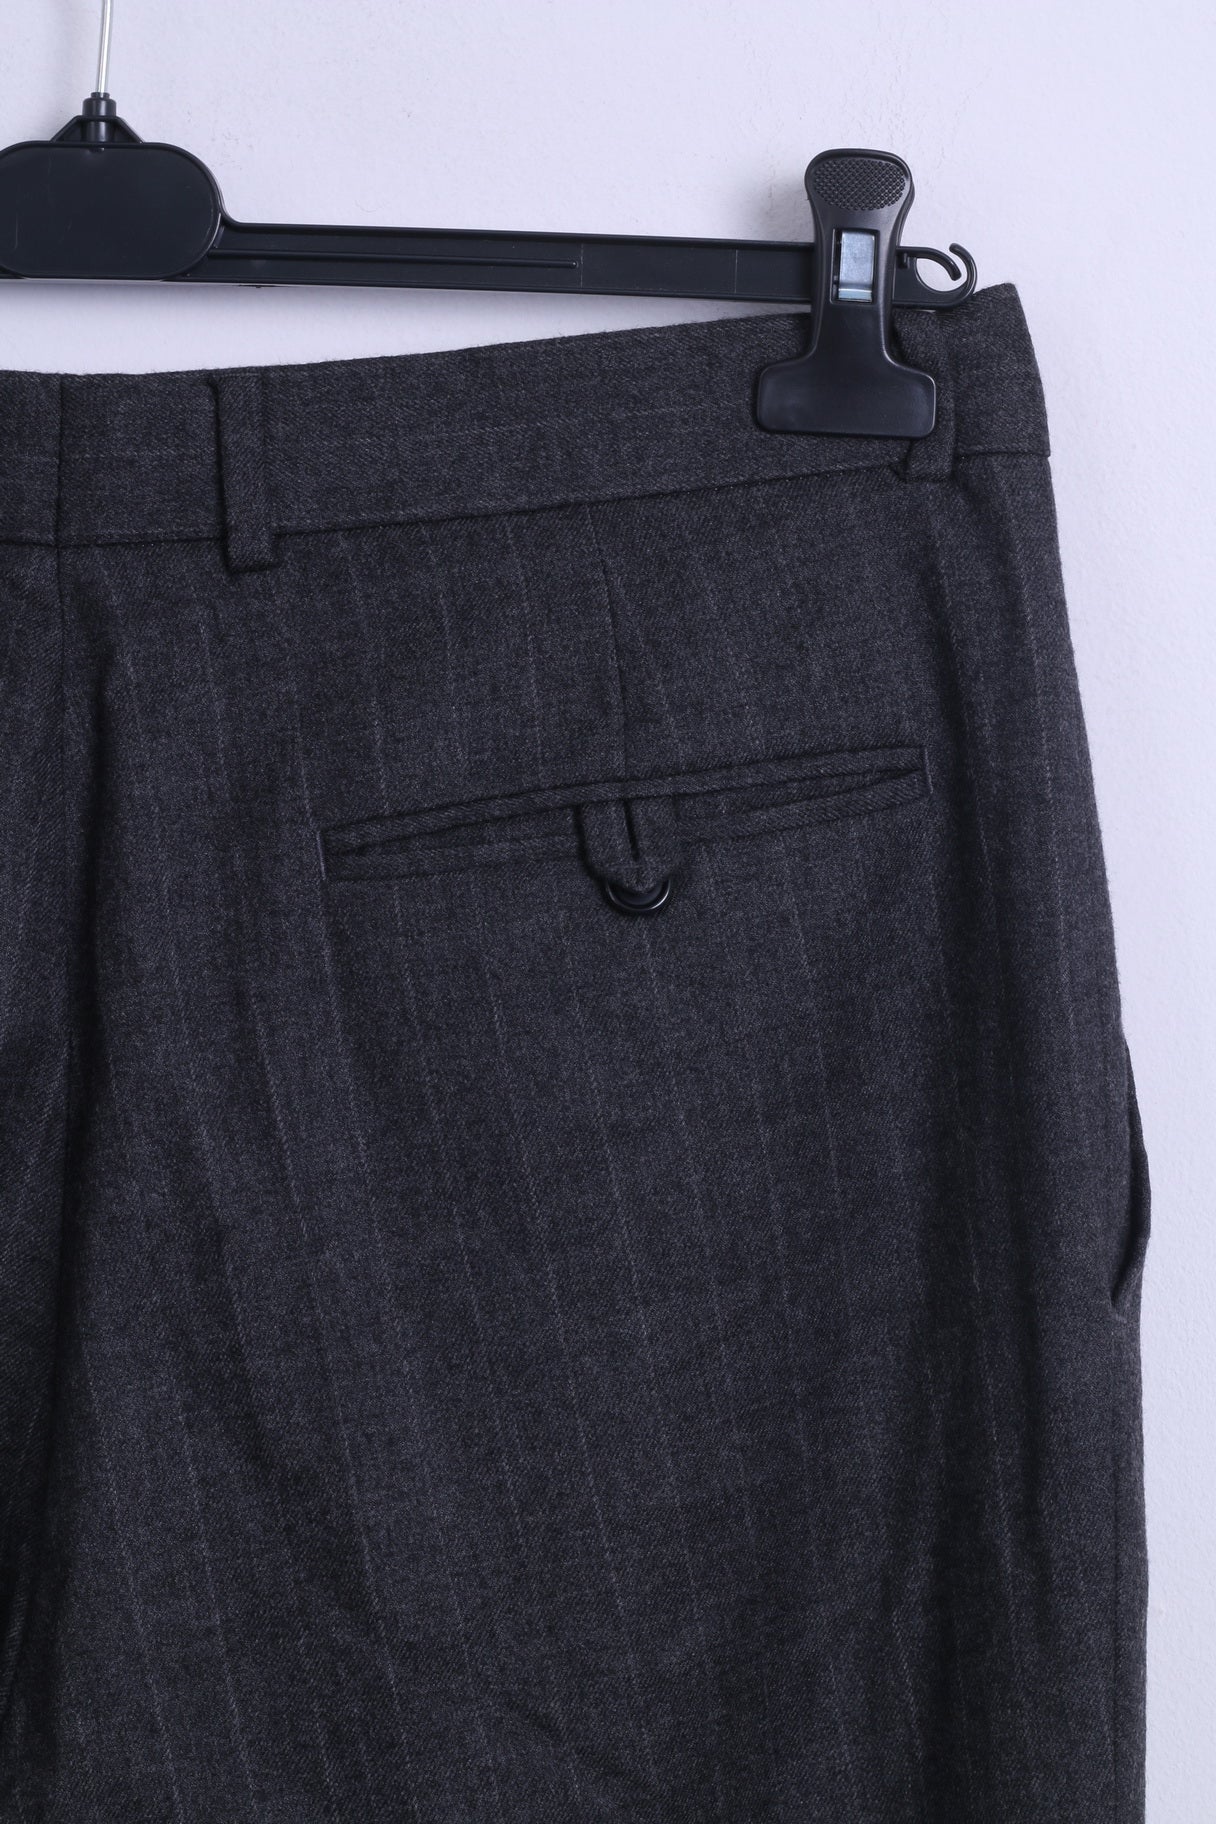 Pantaloni Pierre Cardin da uomo 50 L Pantaloni casual eleganti in lana grigia